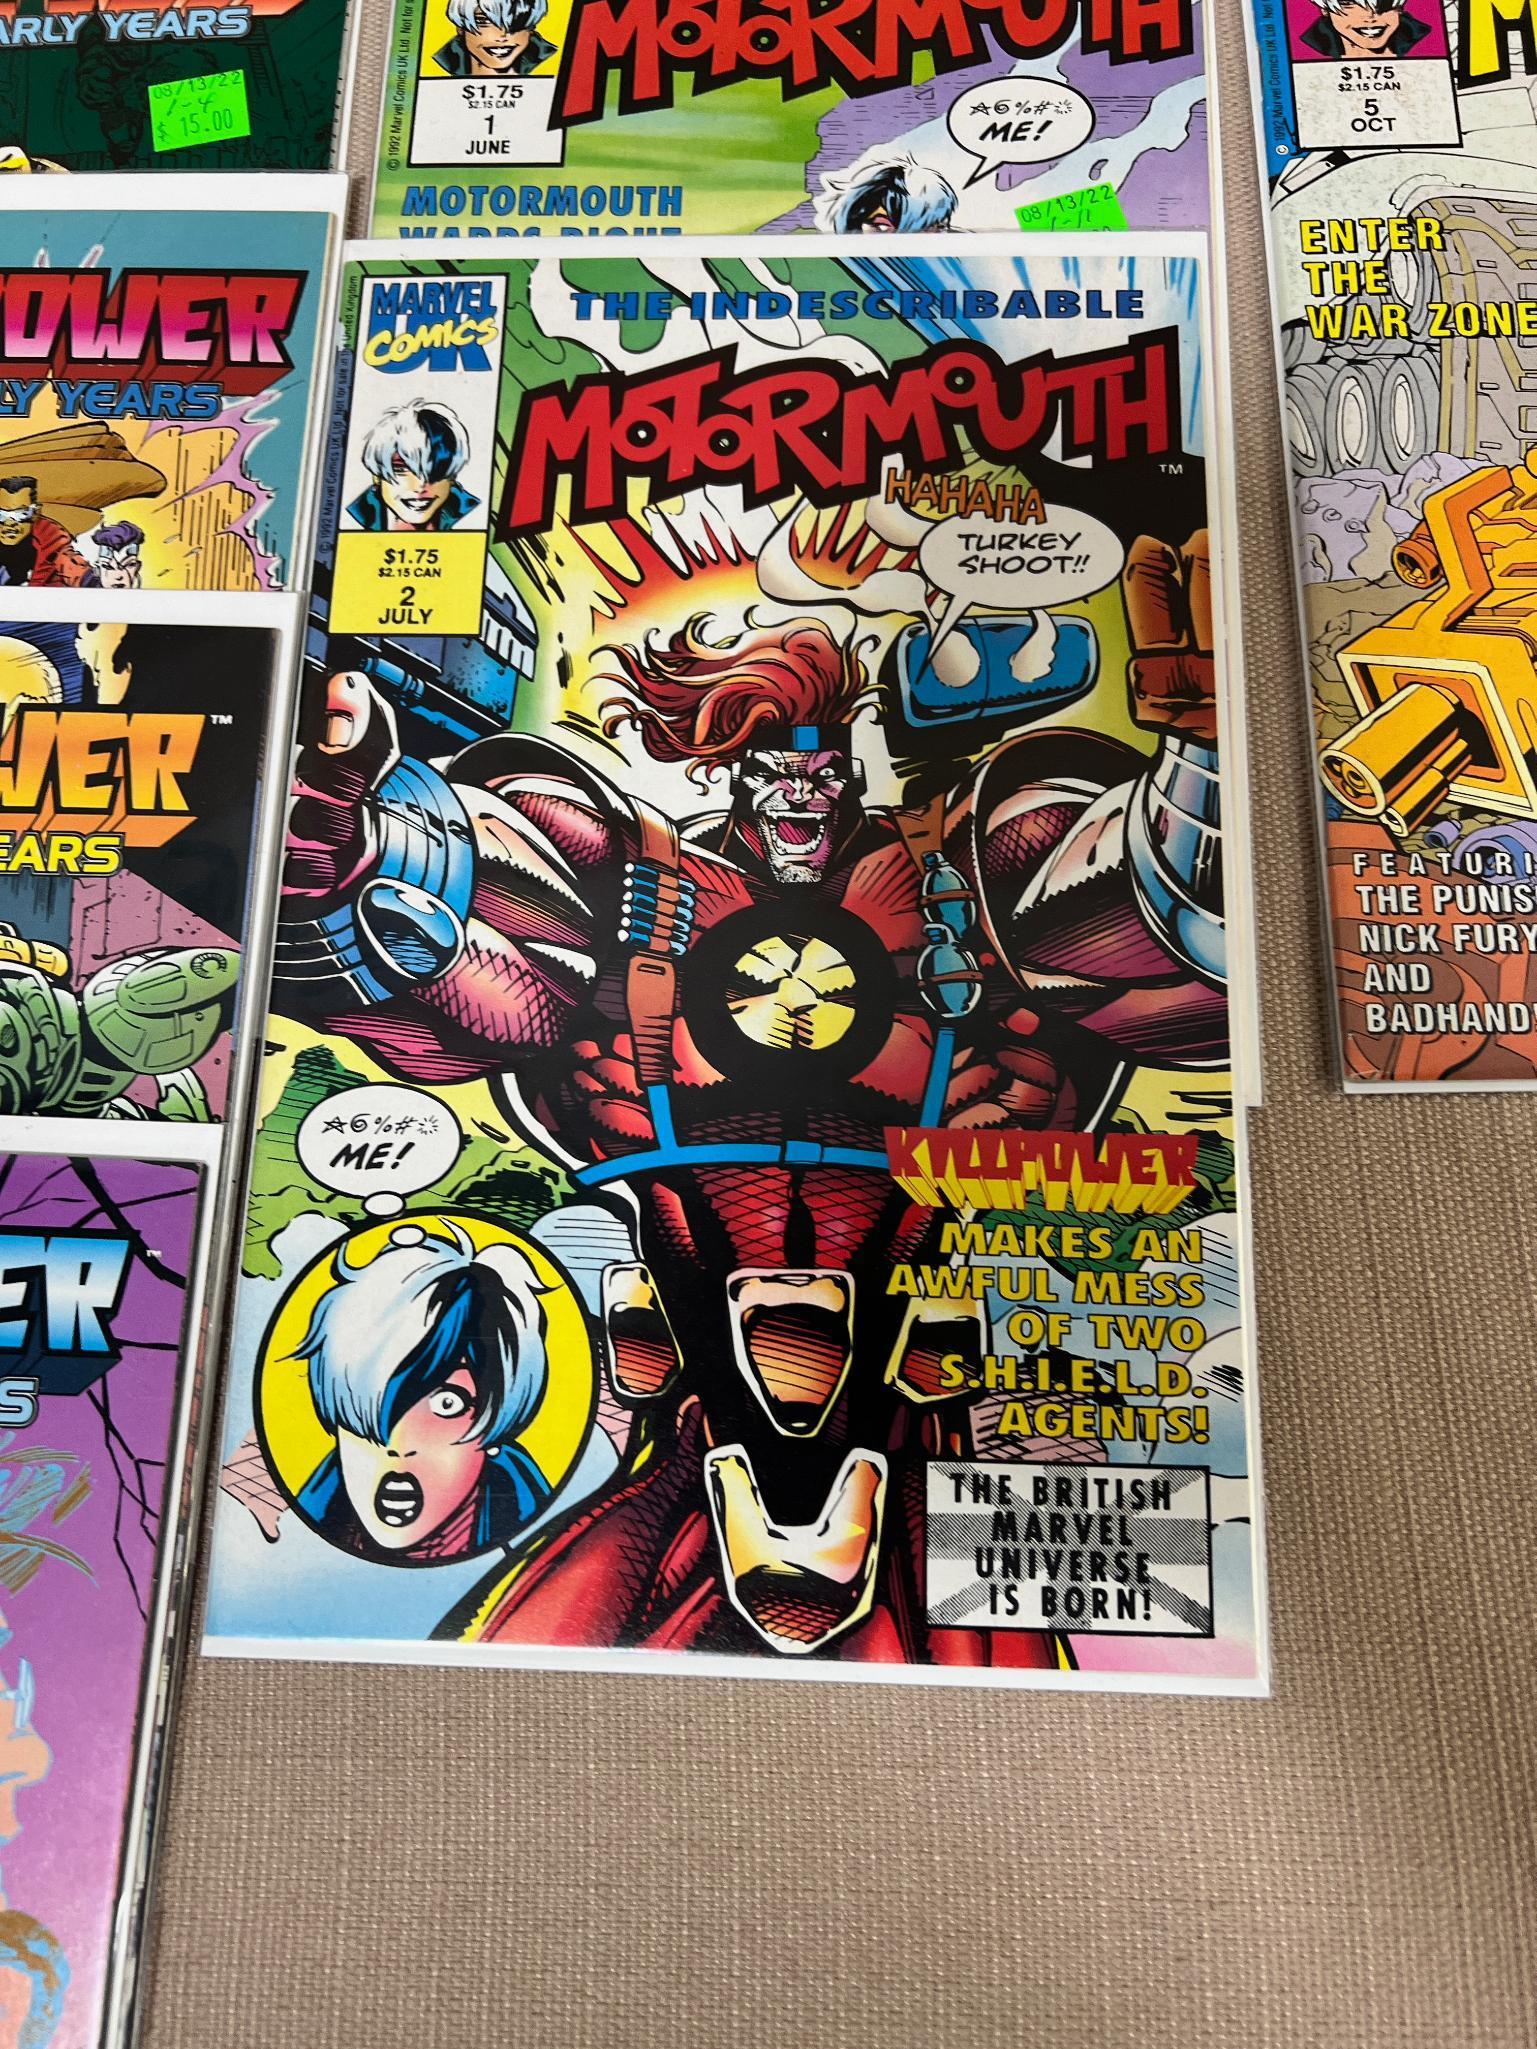 Marvel Comics, Motormouth 1-11, Killpower 1-4, & Black Axe 1-7